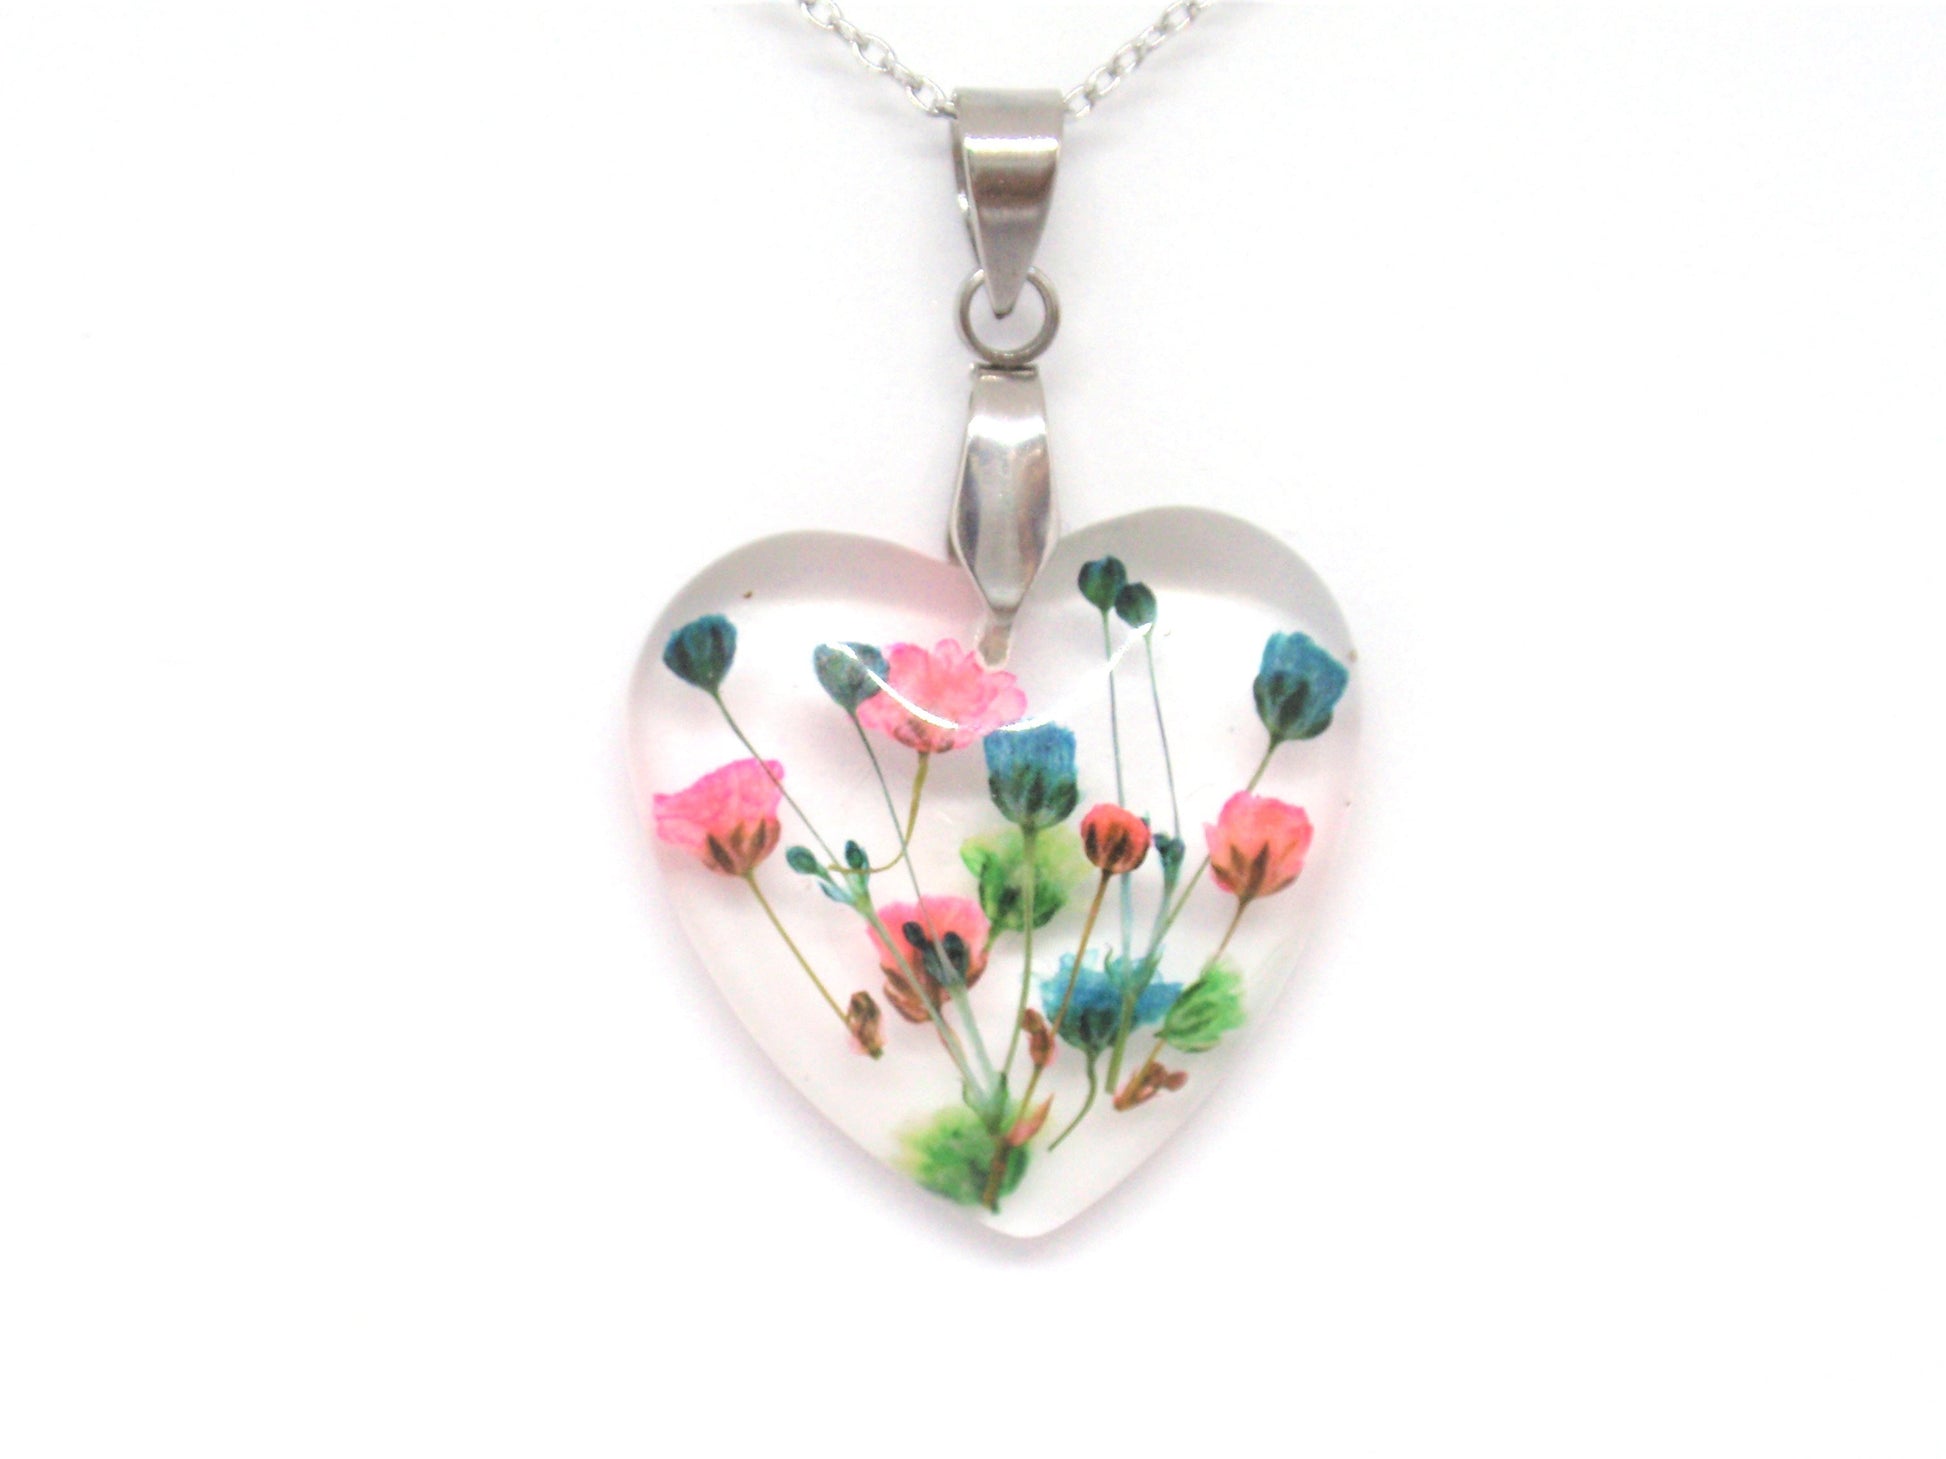 Handmade pressed flower necklace